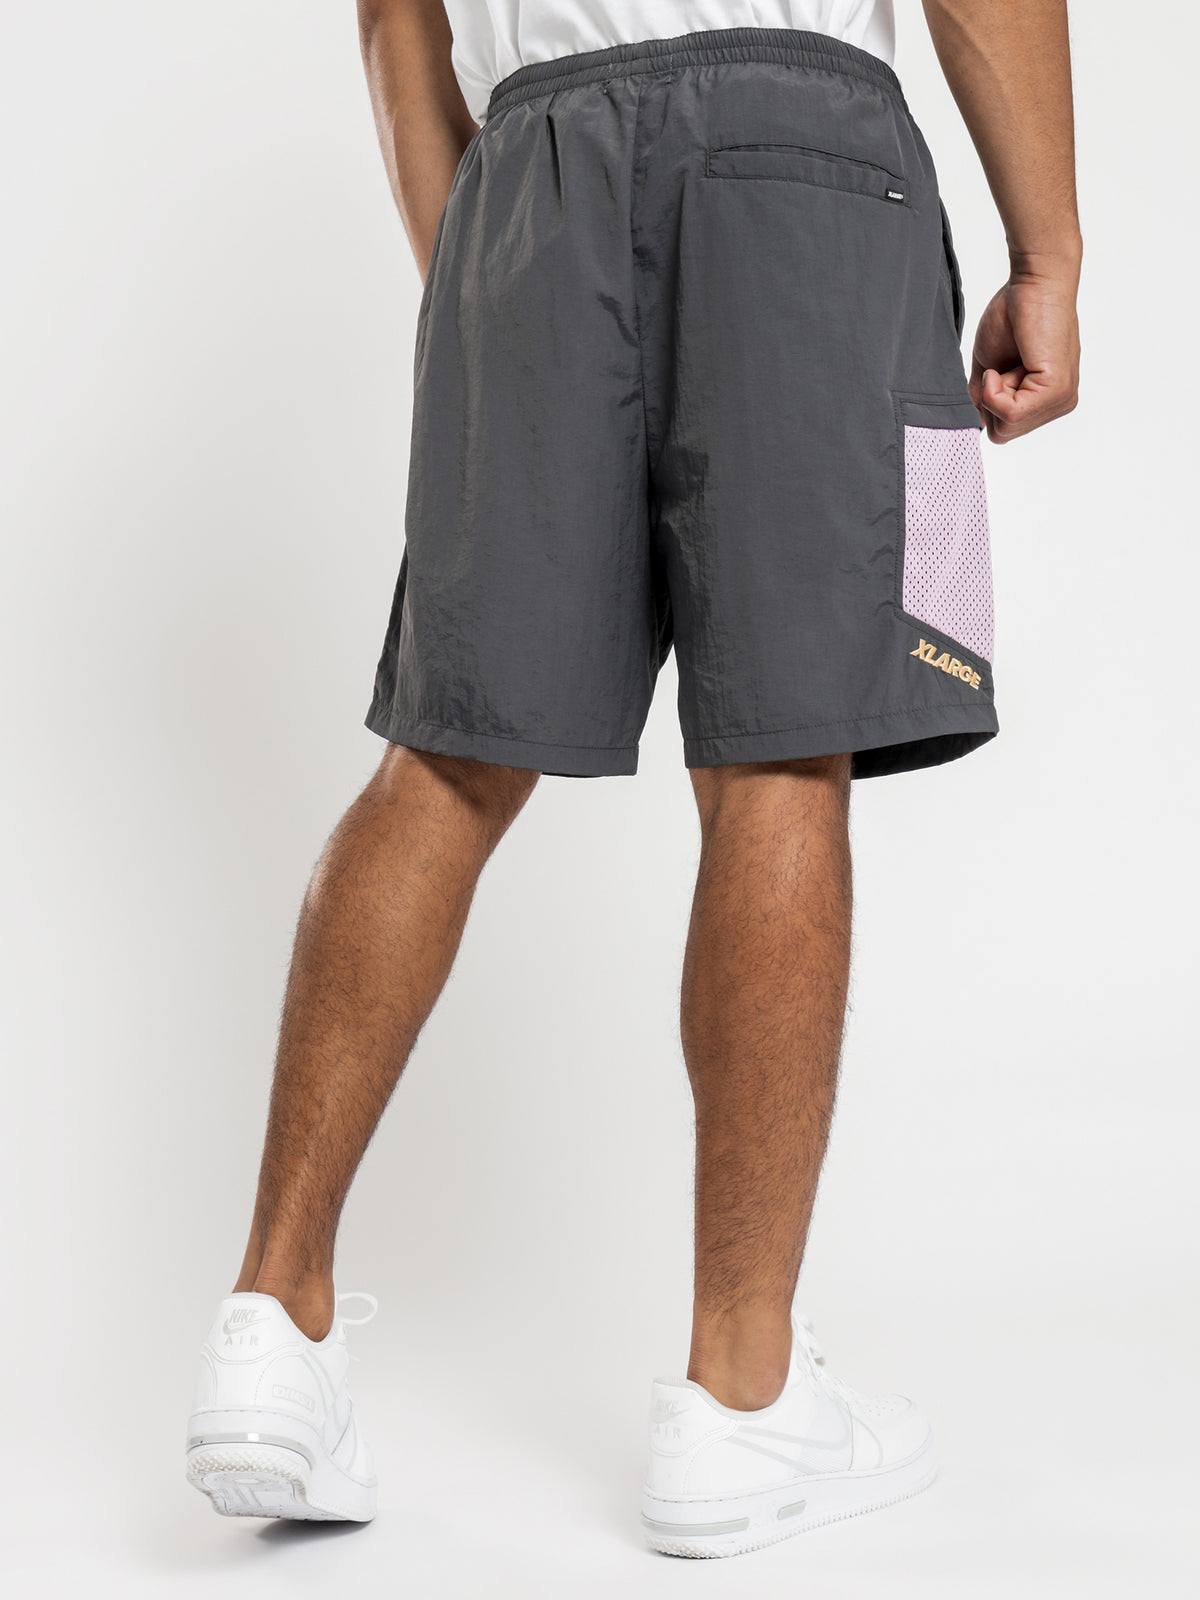 Mesh Street Shorts in Grey &amp; Lilac